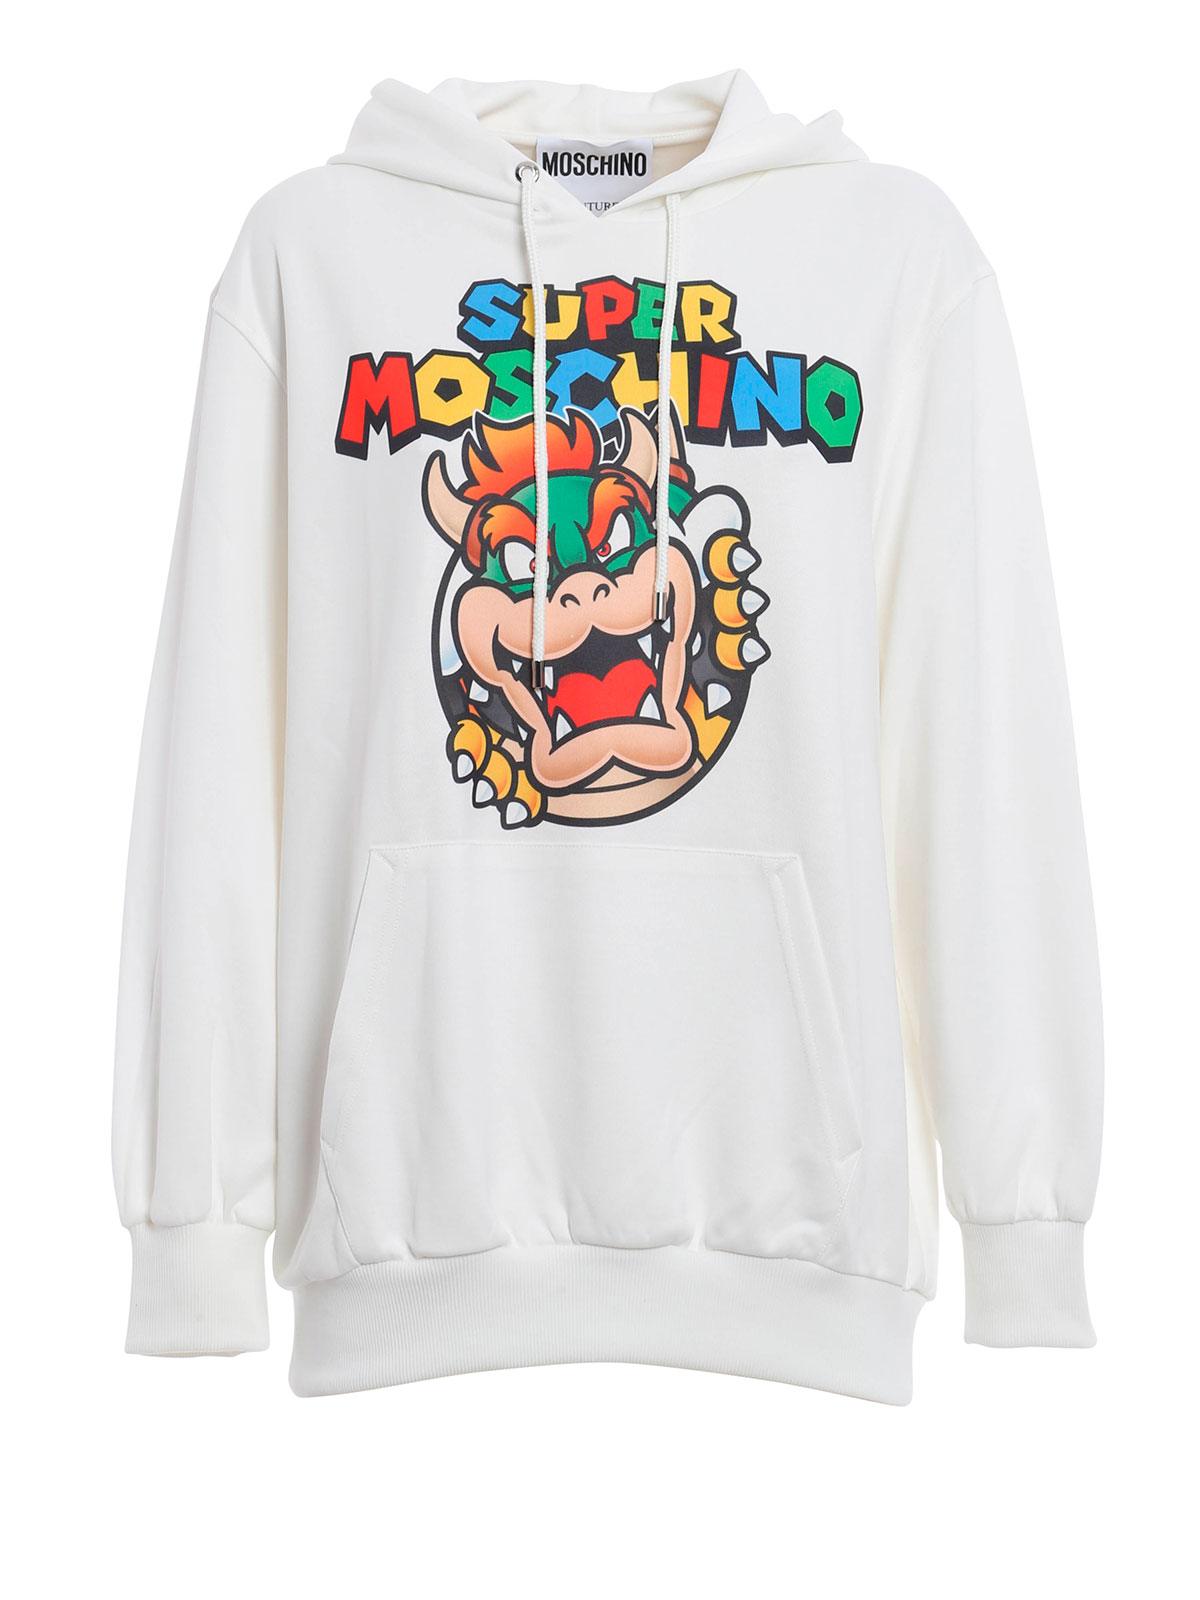 Moschino - Super Moschino sweatshirt 